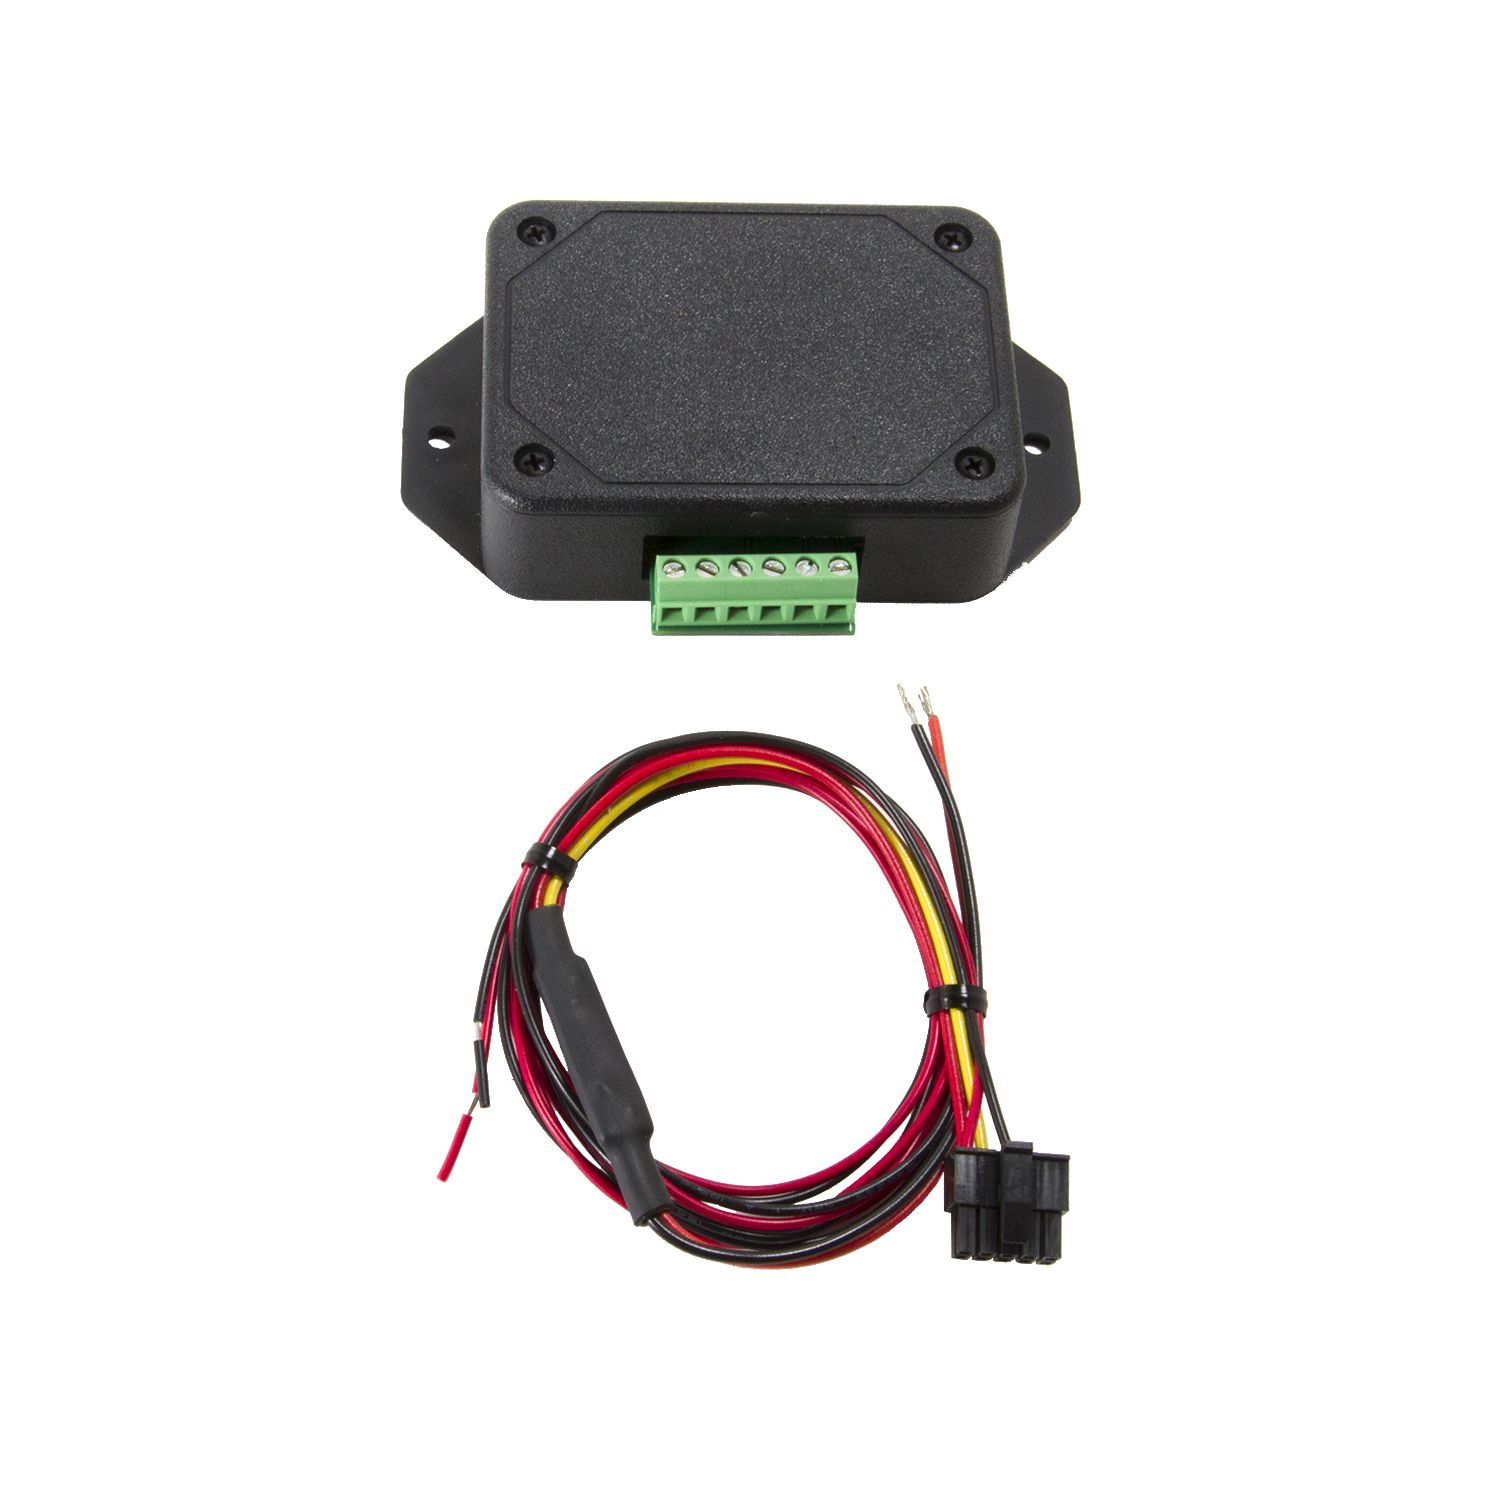 Intellitronix Corp S9020 Intellitronix GPS Speedometer Senders